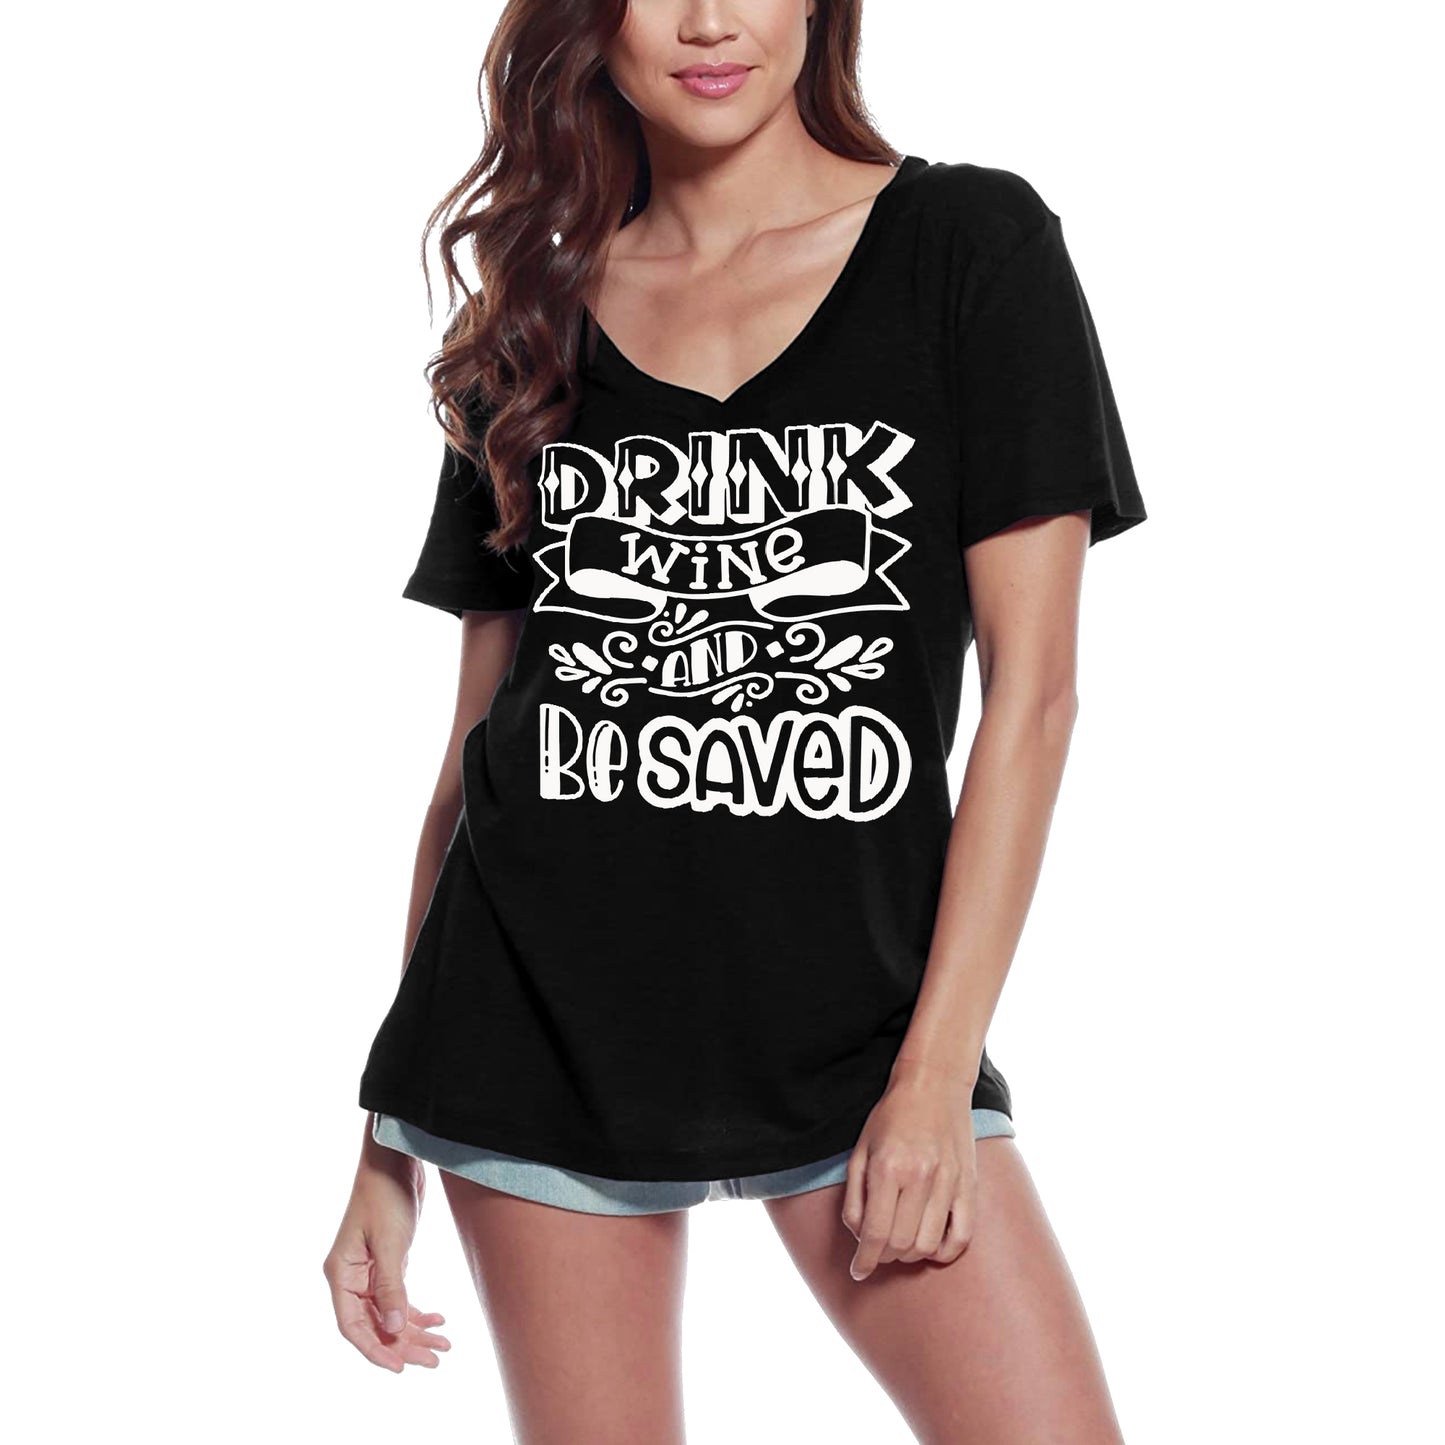 ULTRABASIC Women's T-Shirt Drink Wine and be Saved - Short Sleeve Tee Shirt Tops